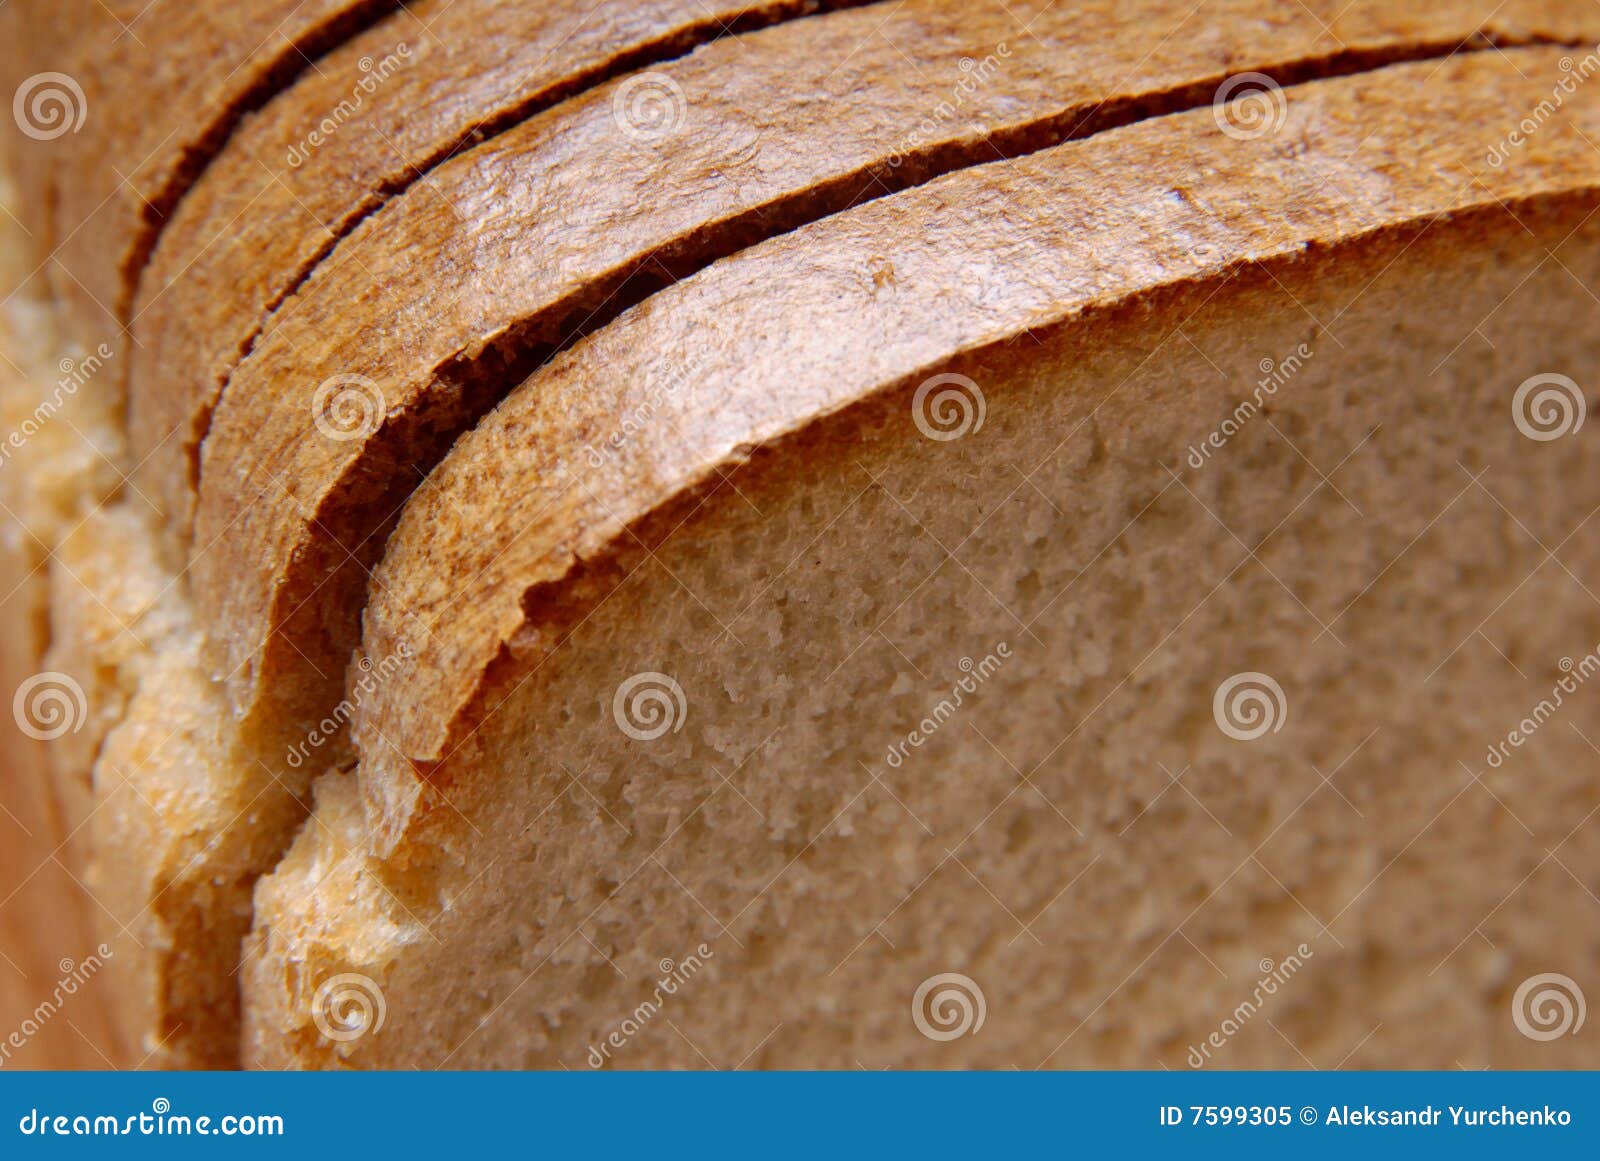 хлеб 2